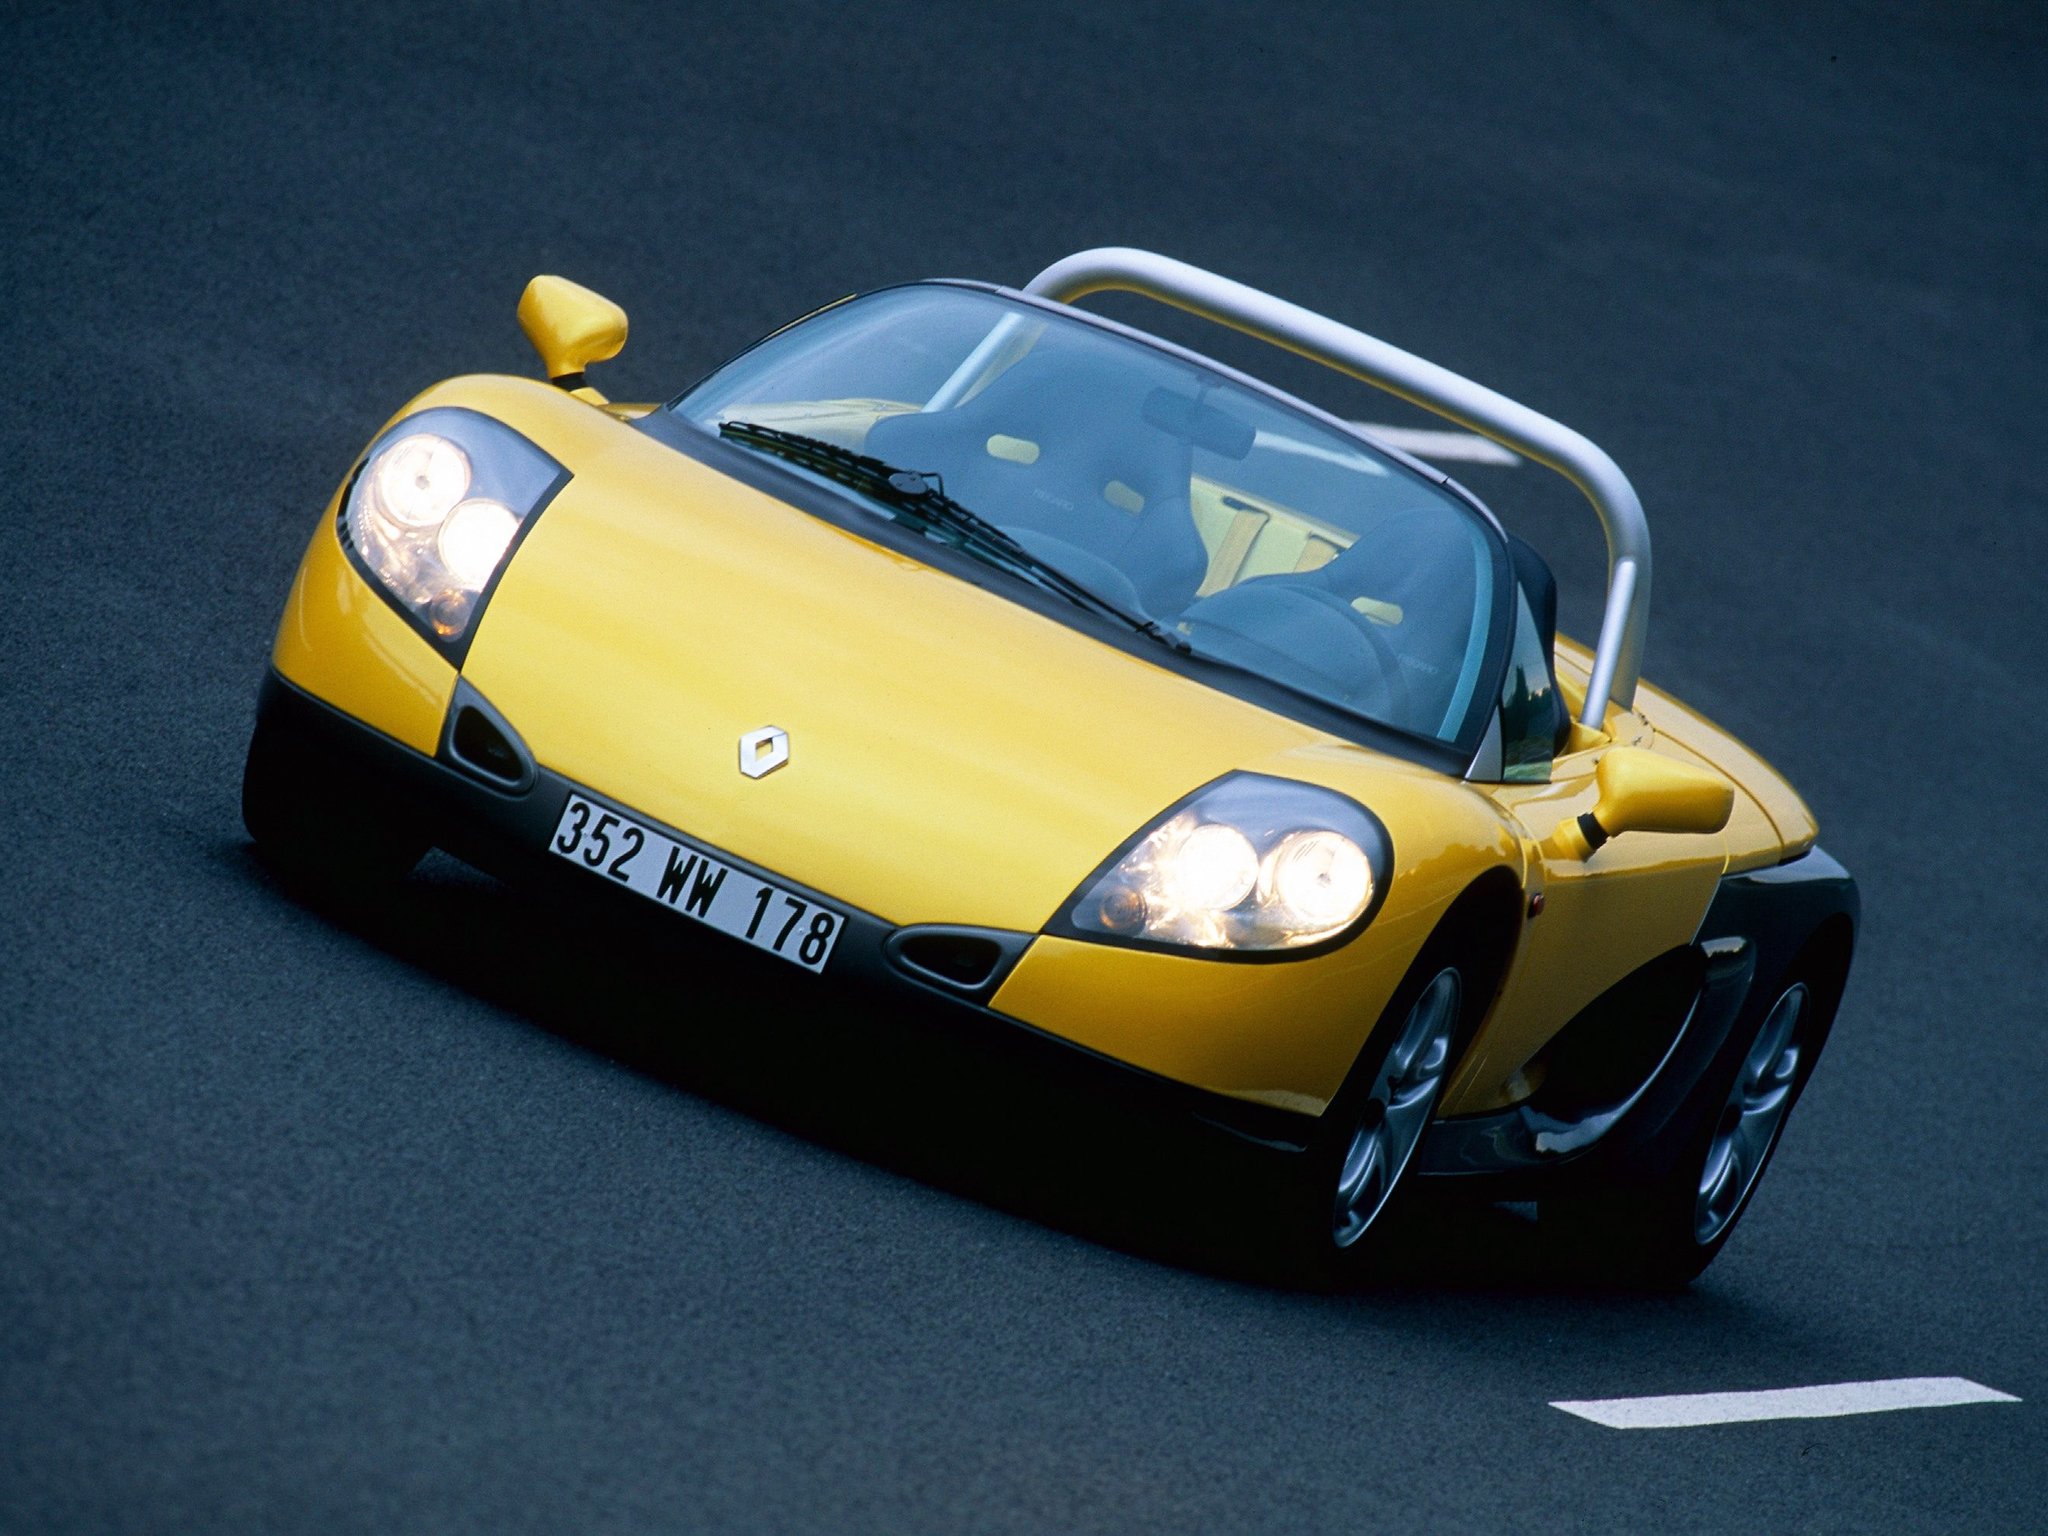 1995 Renault Sport Spider Wallpapers Hd Desktop And Mobile Backgrounds